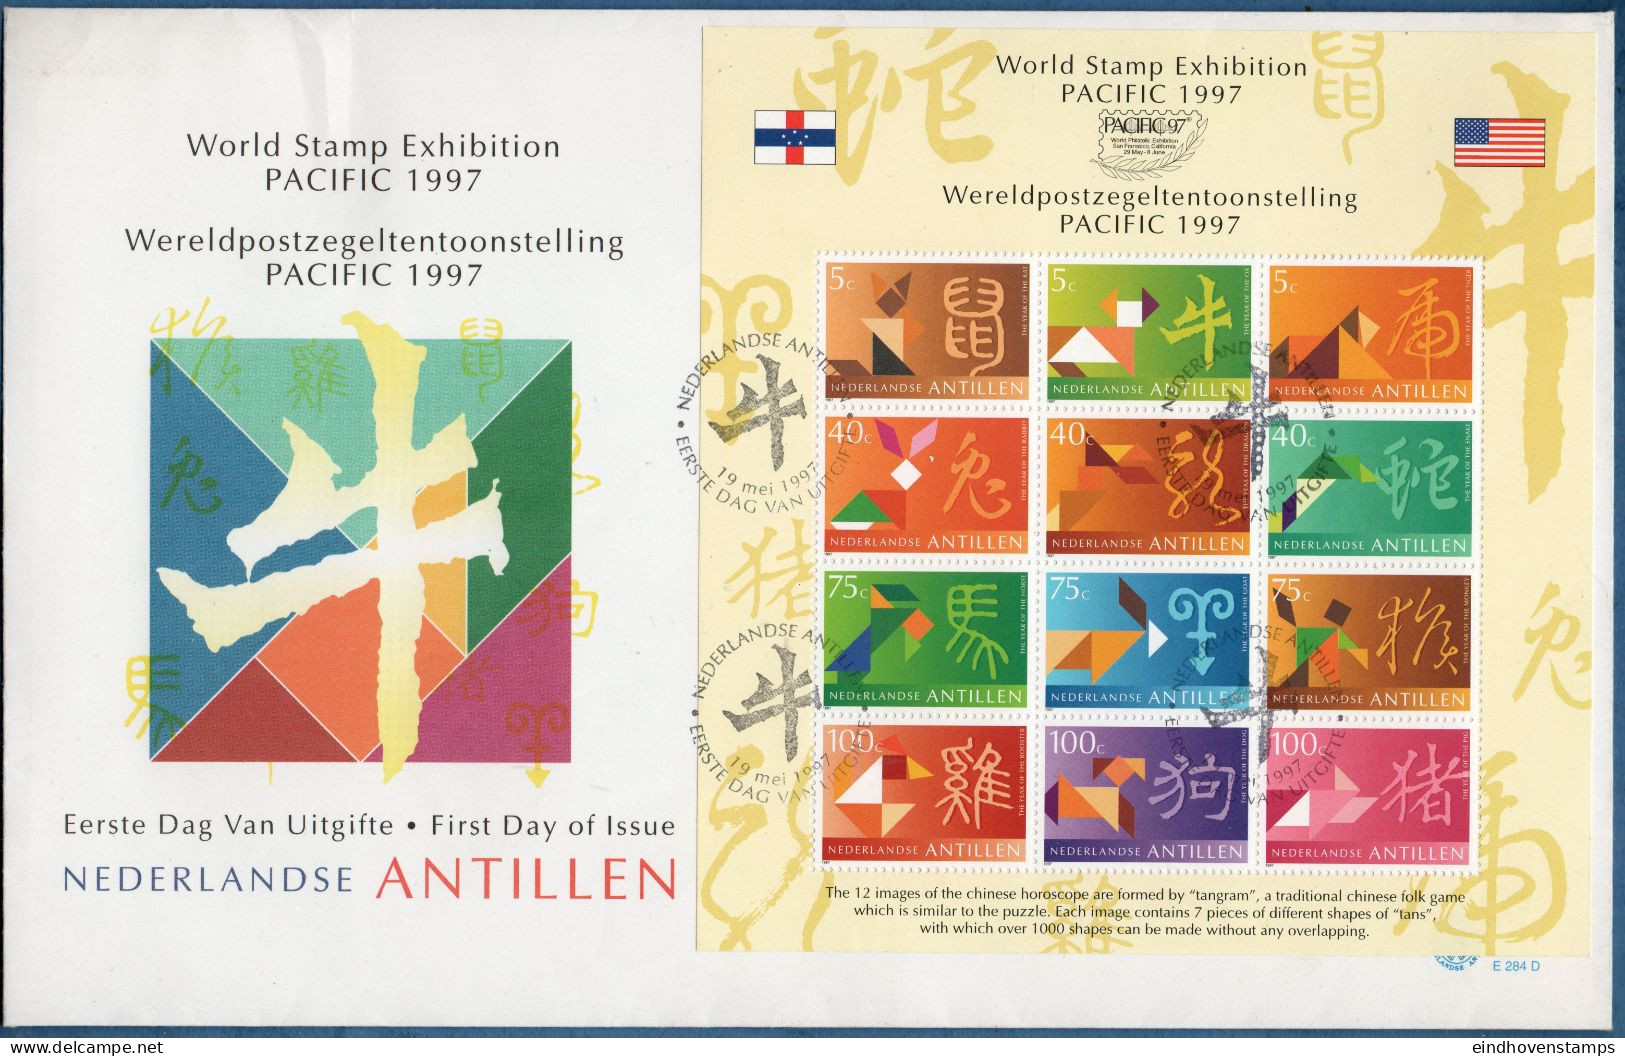 Dutch Antillen 1997 Pacafic Block Issue On FDC - Curacao, Netherlands Antilles, Aruba